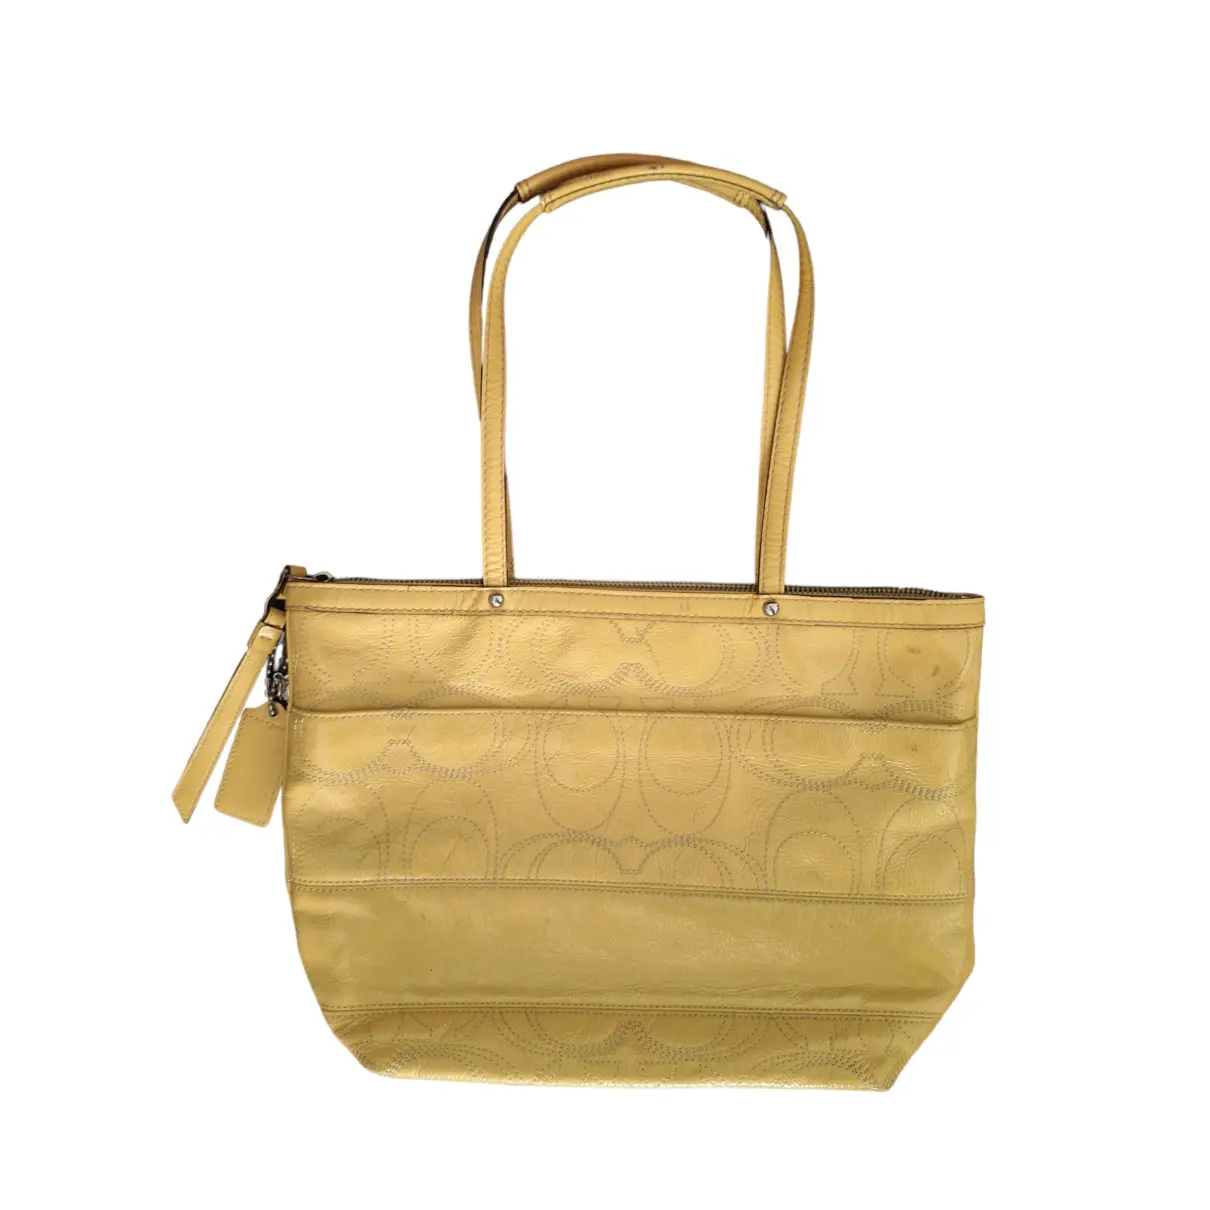 Buy Coach CITY ZIP TOTE patent leather handbag online